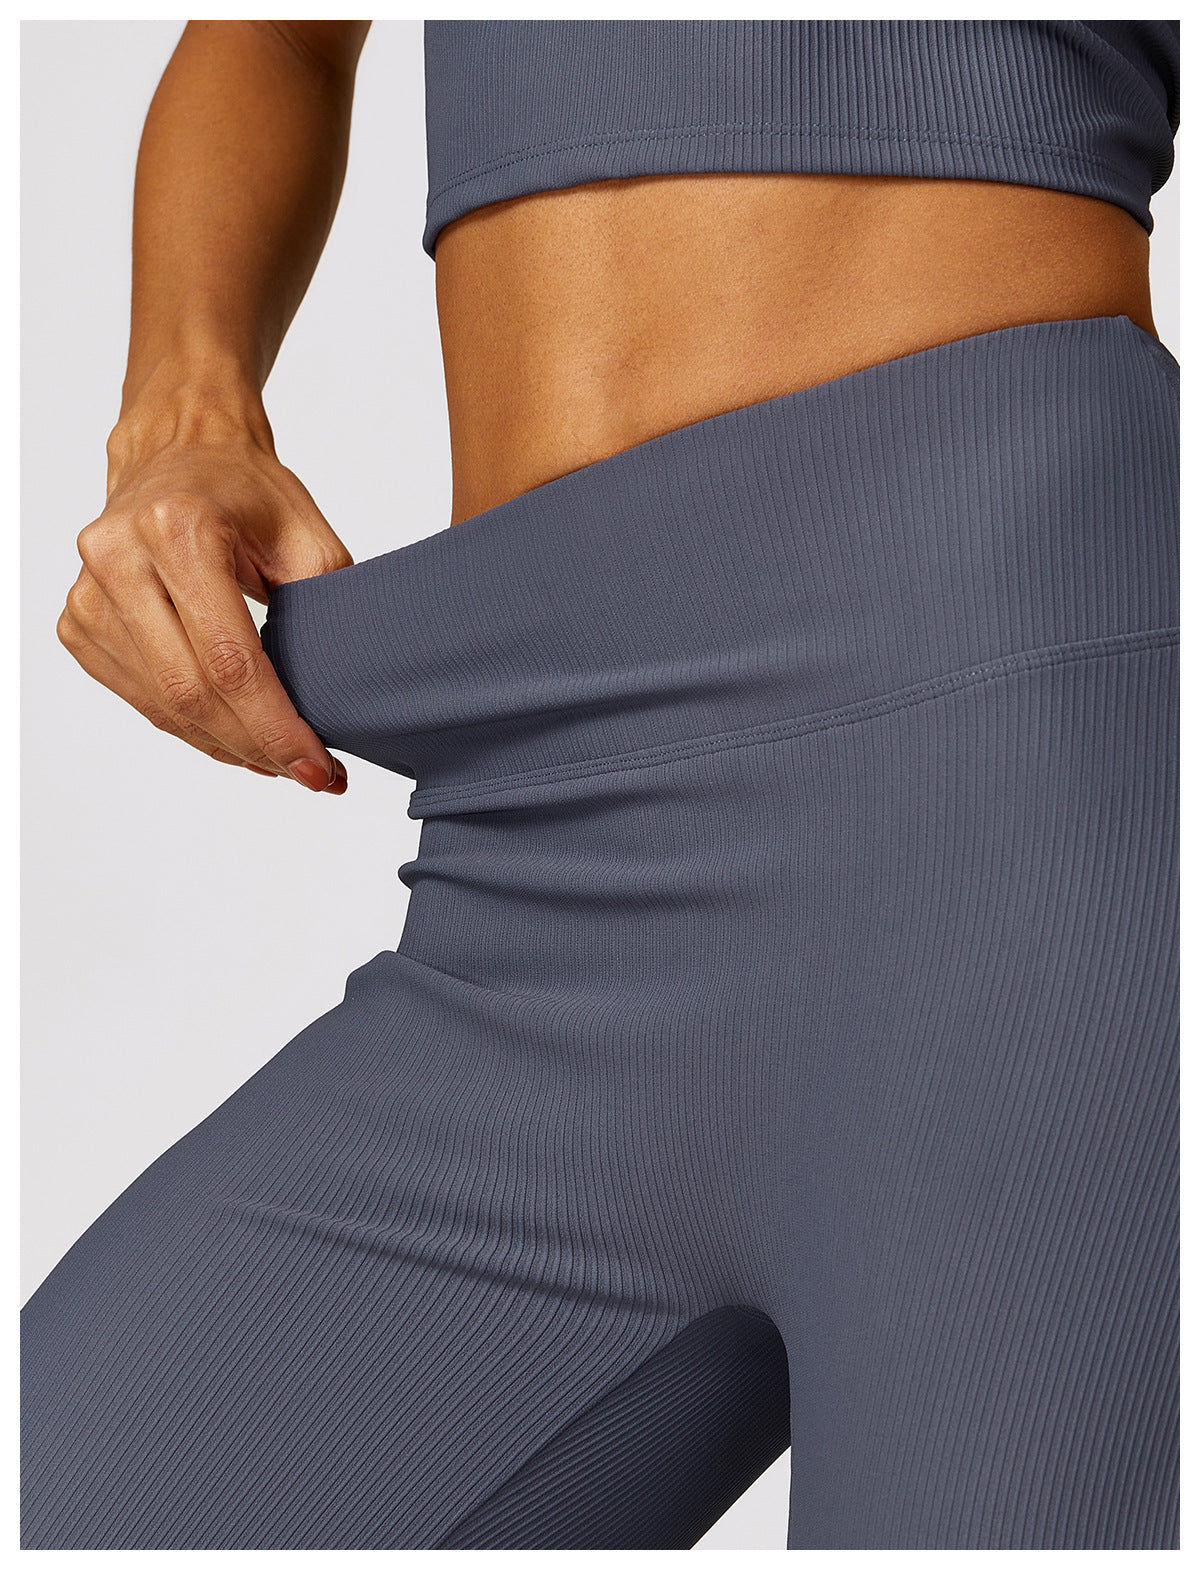 58# AL Yoga Bra Pants Set